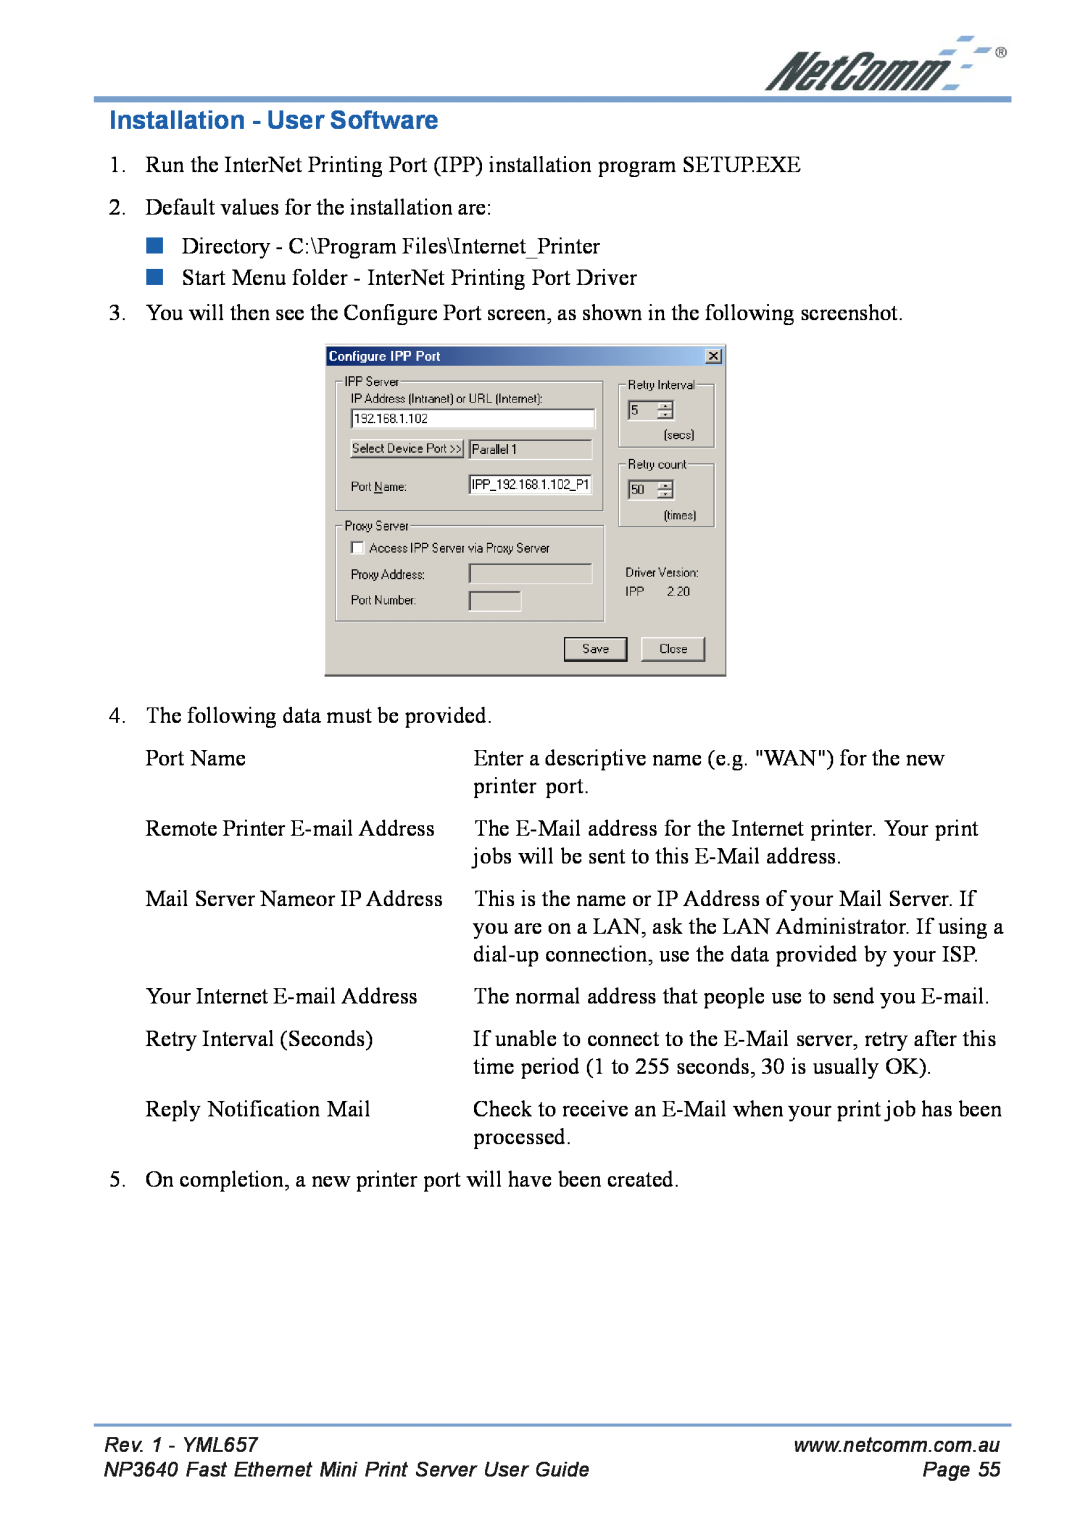 NetComm NP3640 manual Installation - User Software 